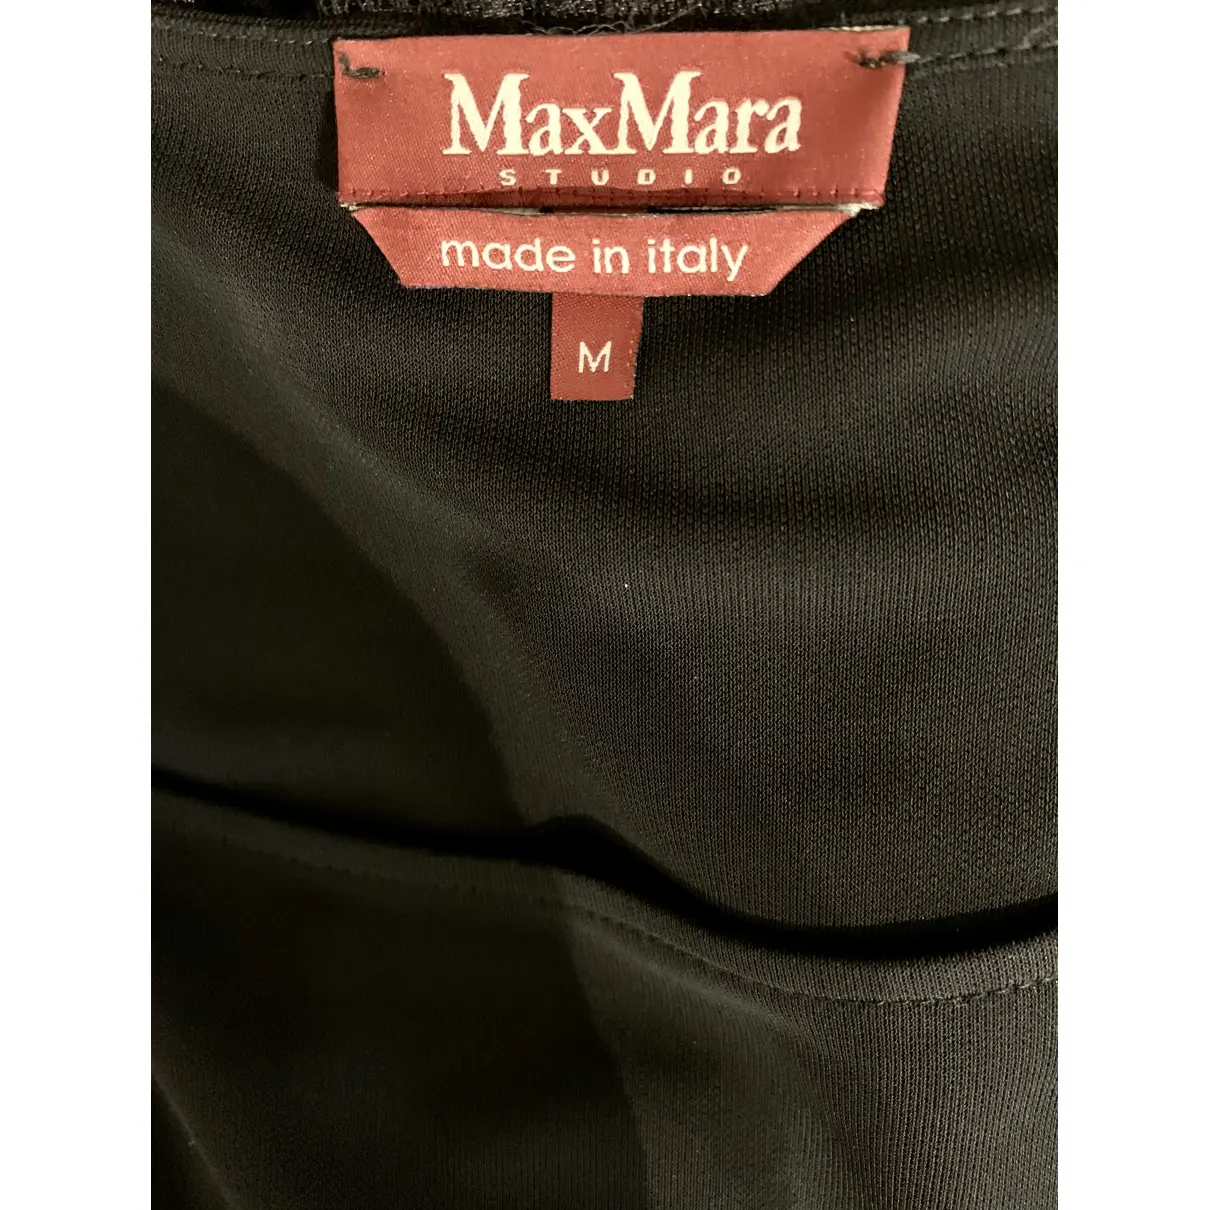 Luxury Max Mara Studio Dresses Women